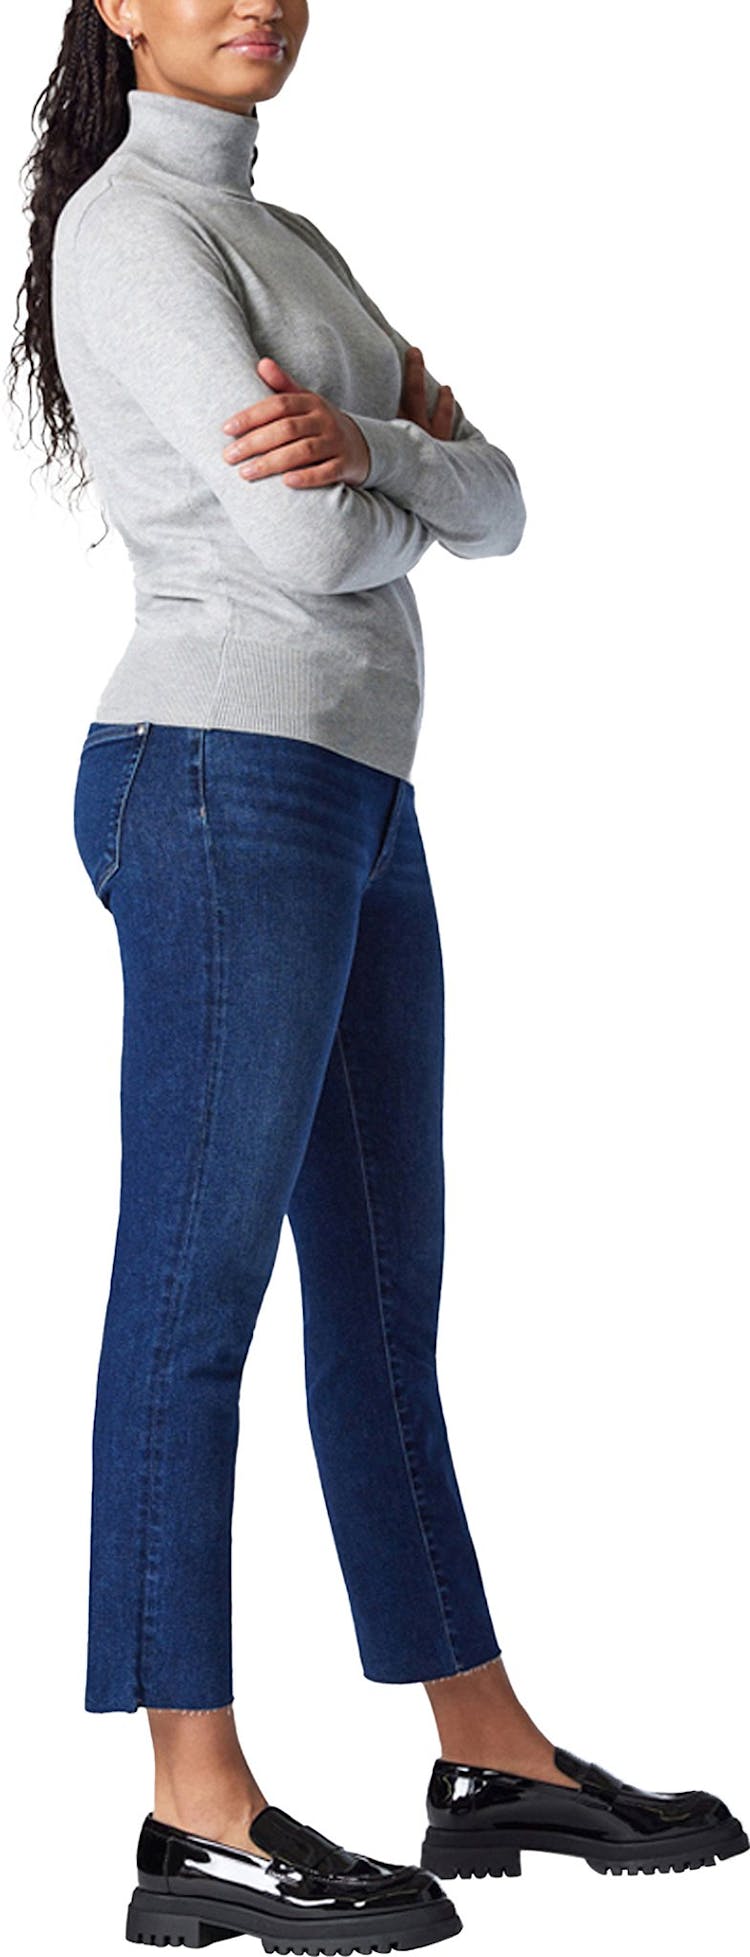 Product gallery image number 3 for product Viola Dark Brushed Flex Blue Denim Jean - Women's